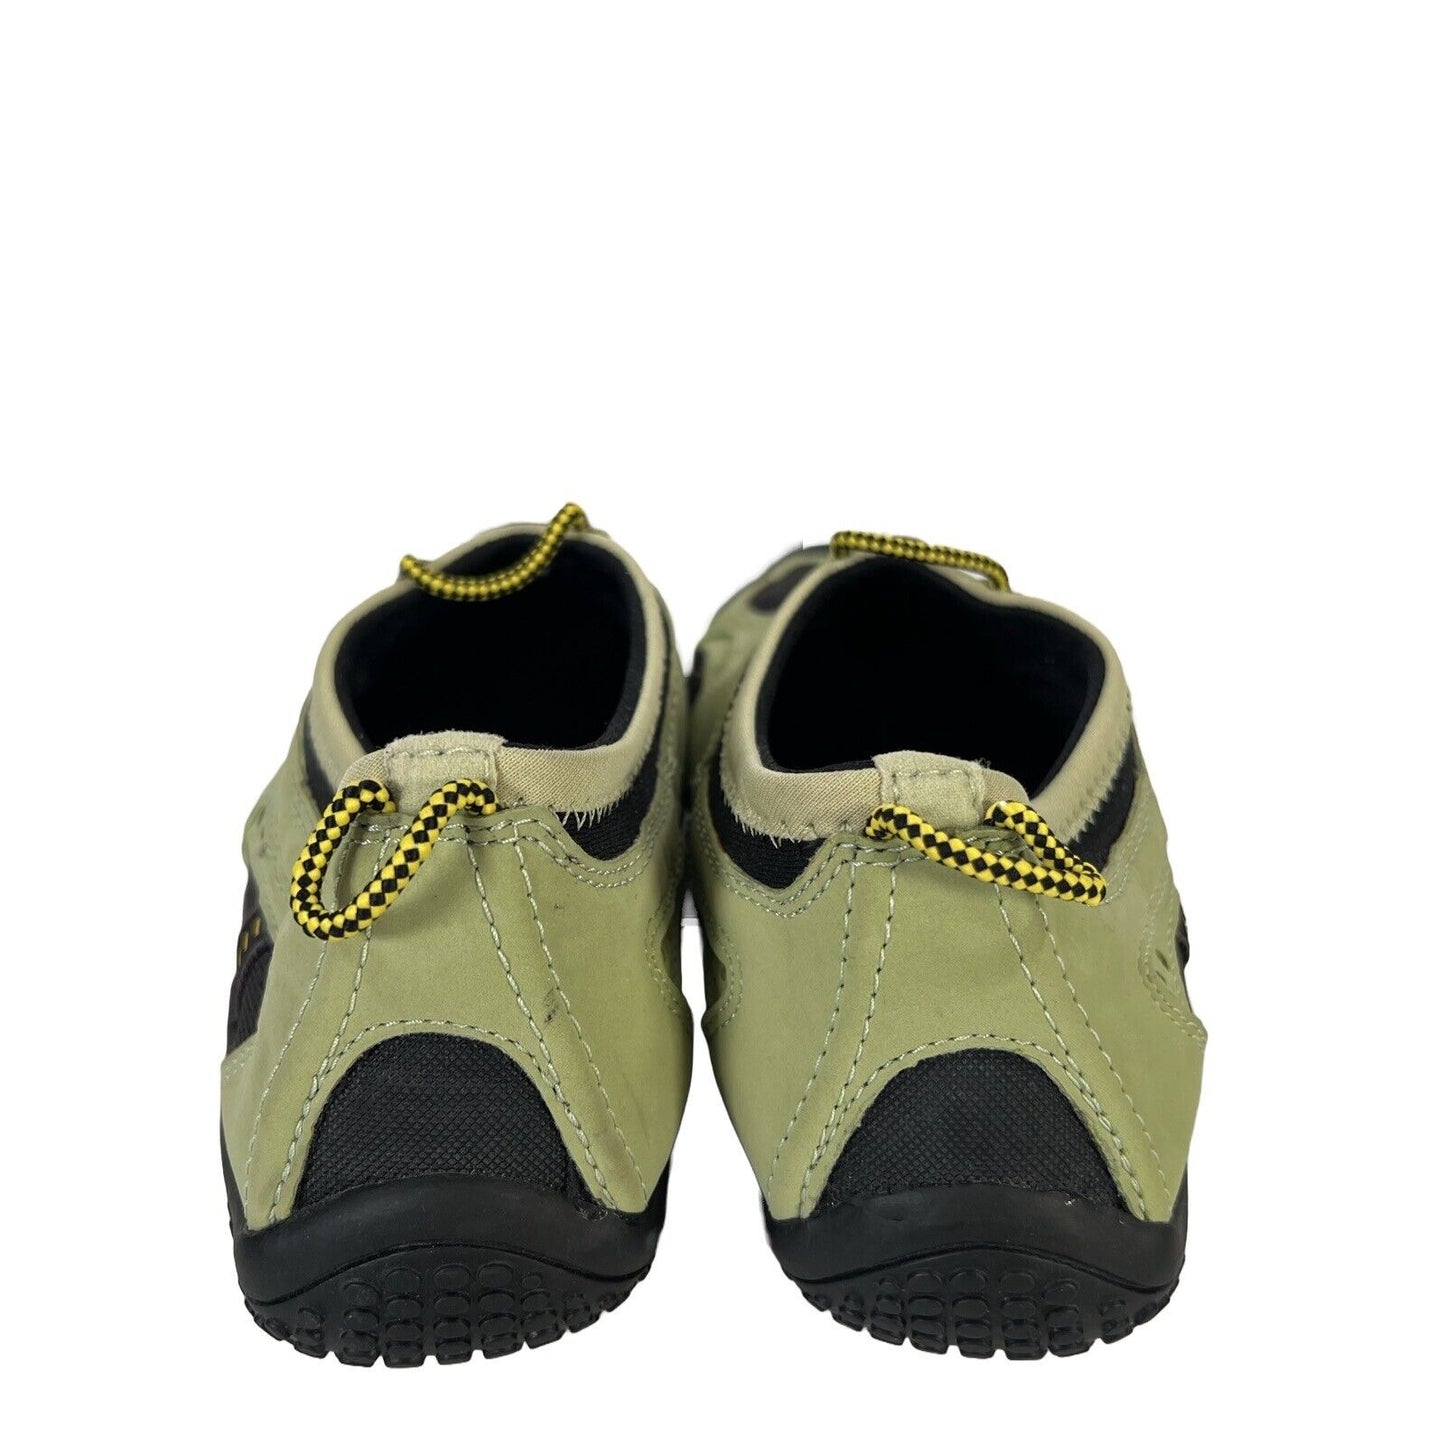 LL Bean Women's Green/Black Grip Bottom Hiking Water Shoes - 9.5